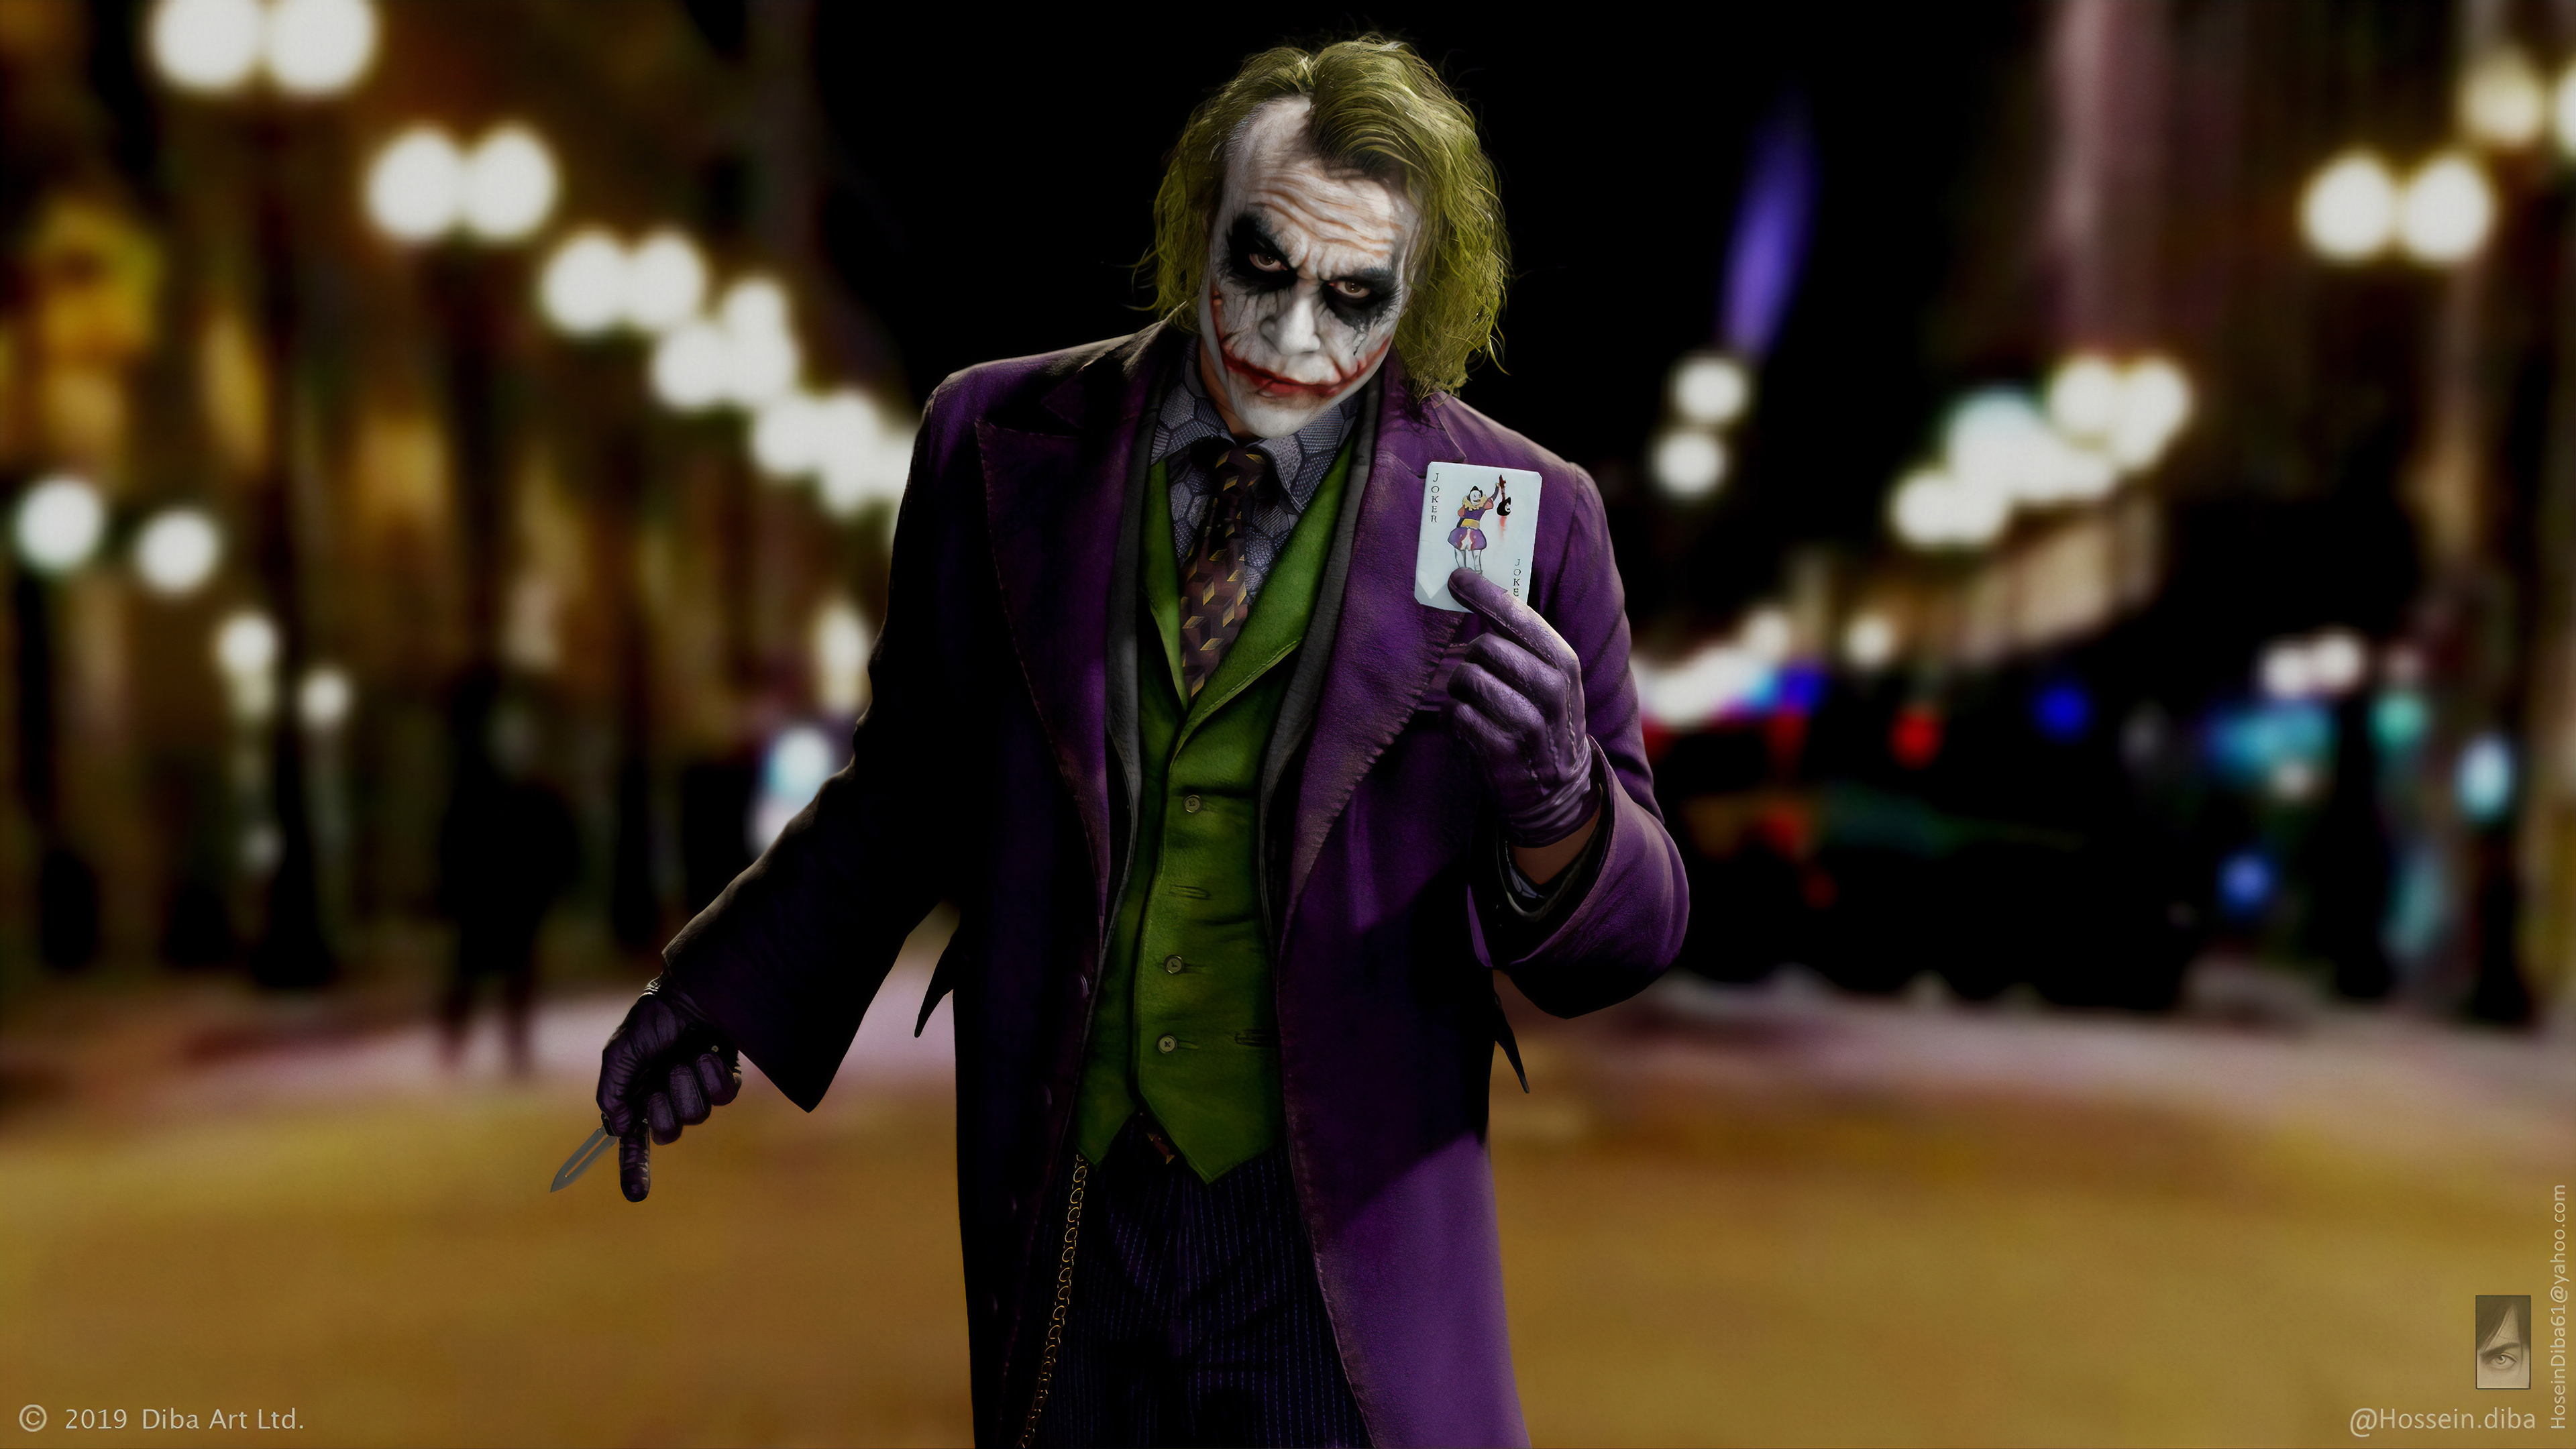 Joker Heath Ledger Flip It 4k, HD Superheroes, 4k Wallpapers, Images,  Backgrounds, Photos and Pictures